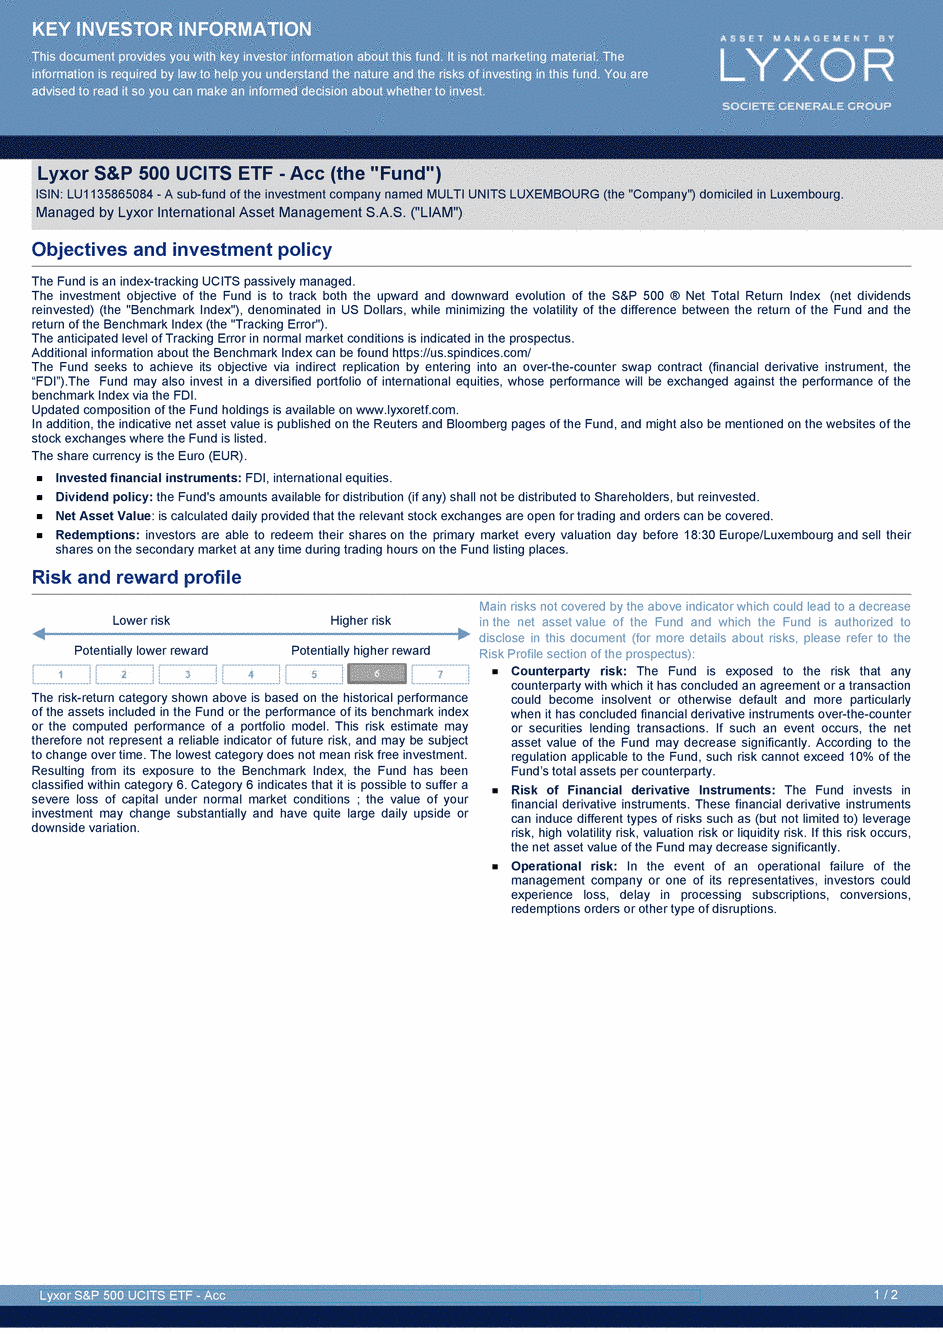 DICI Lyxor S&P 500 UCITS ETF - Acc - 19/02/2021 - Anglais